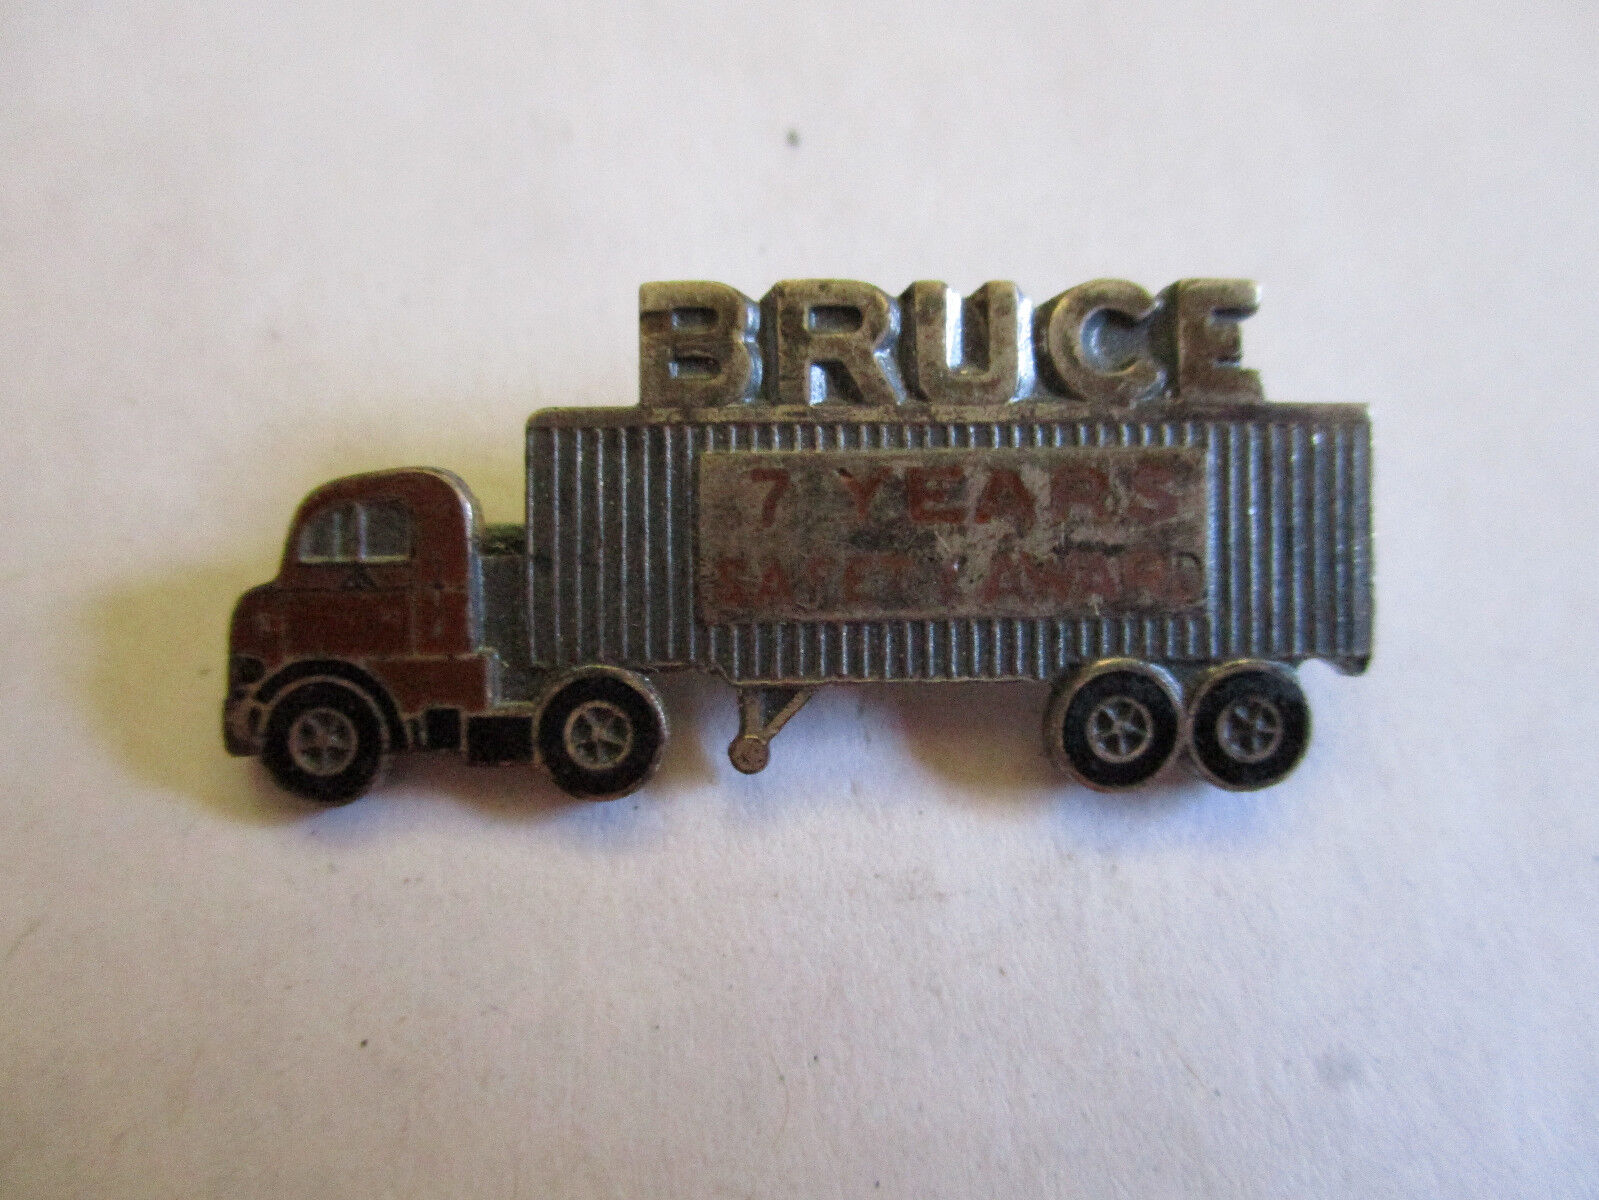 Bruce 7yr Trucking Truck Driver Employee Safety Award Pin